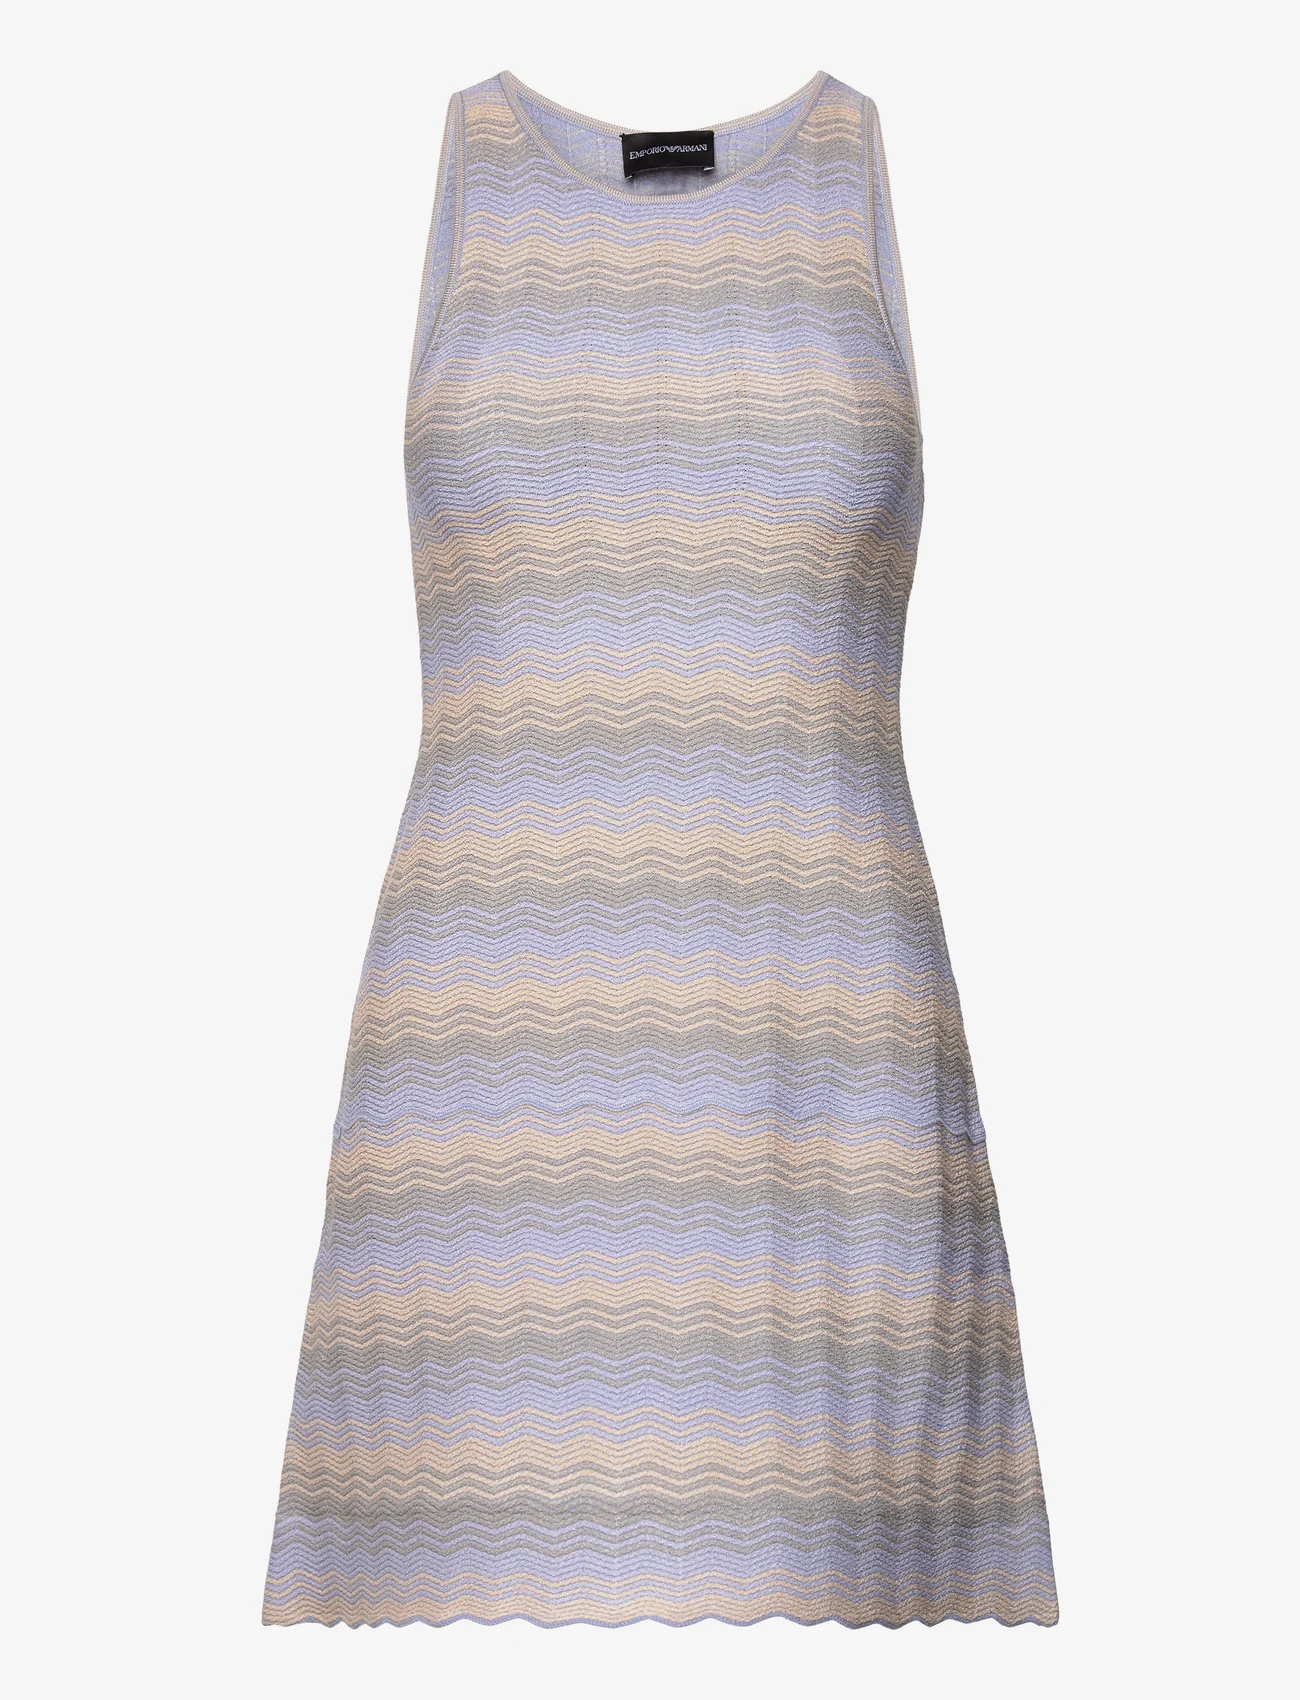 Emporio Armani - DRESS - short dresses - fanta grigio - 0